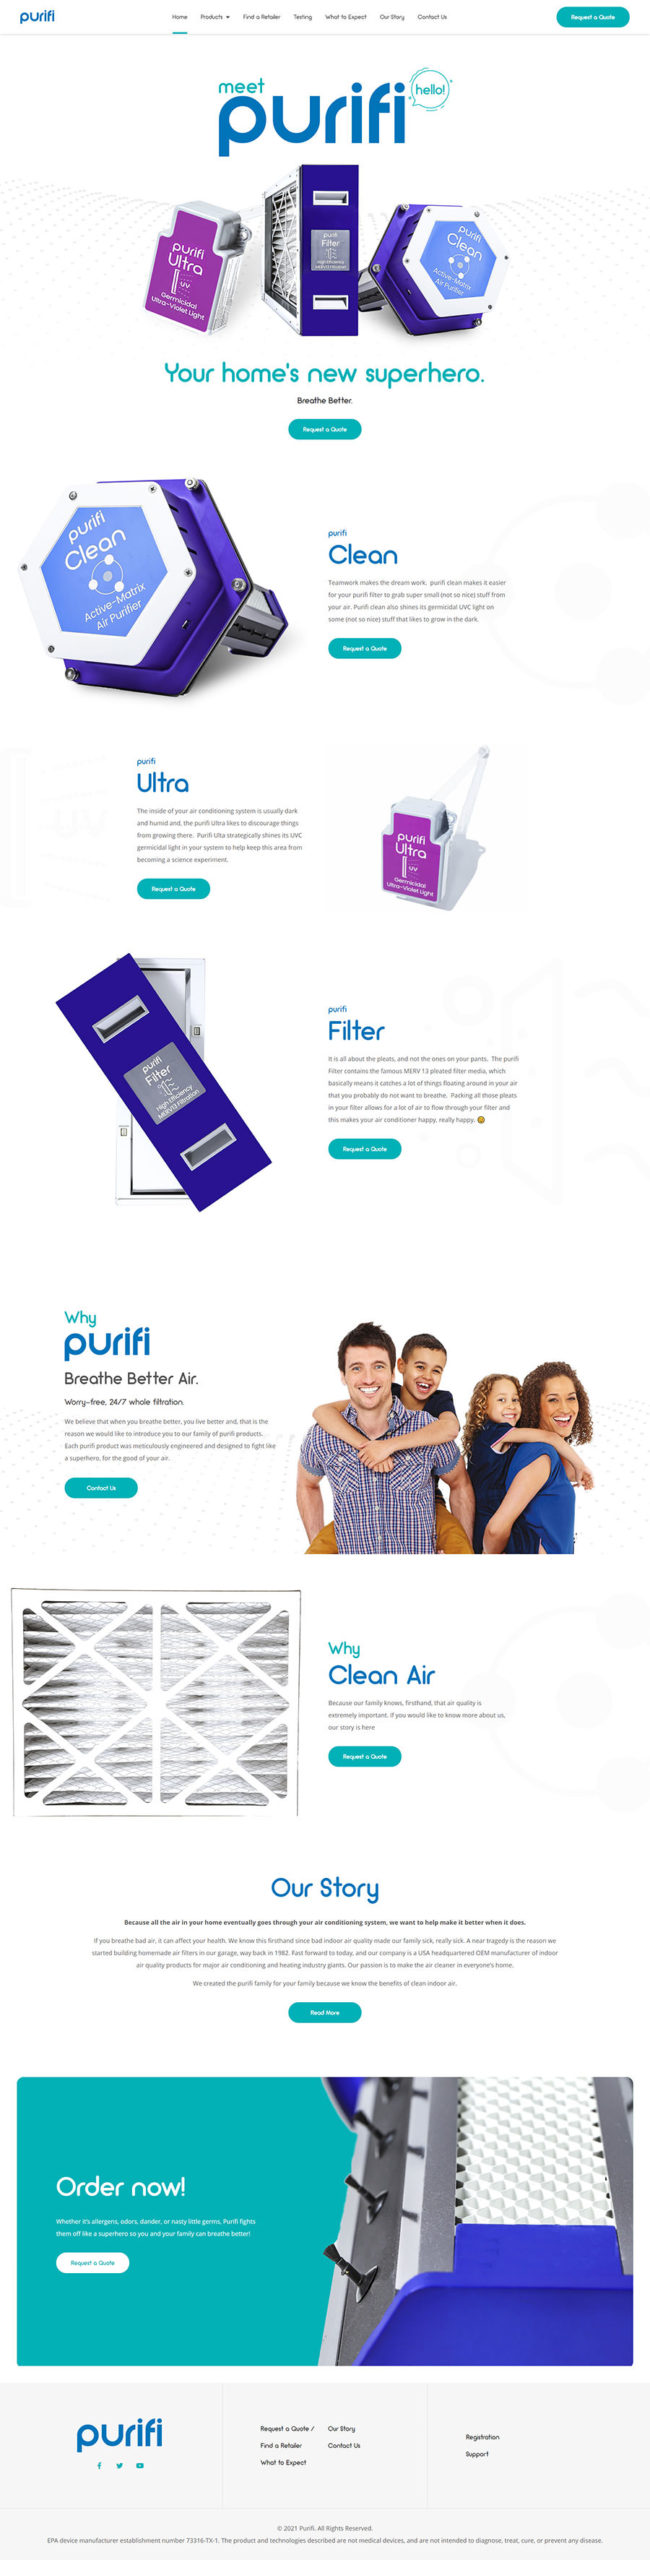 Web Design for Purifi Air Filters Royse City Texas